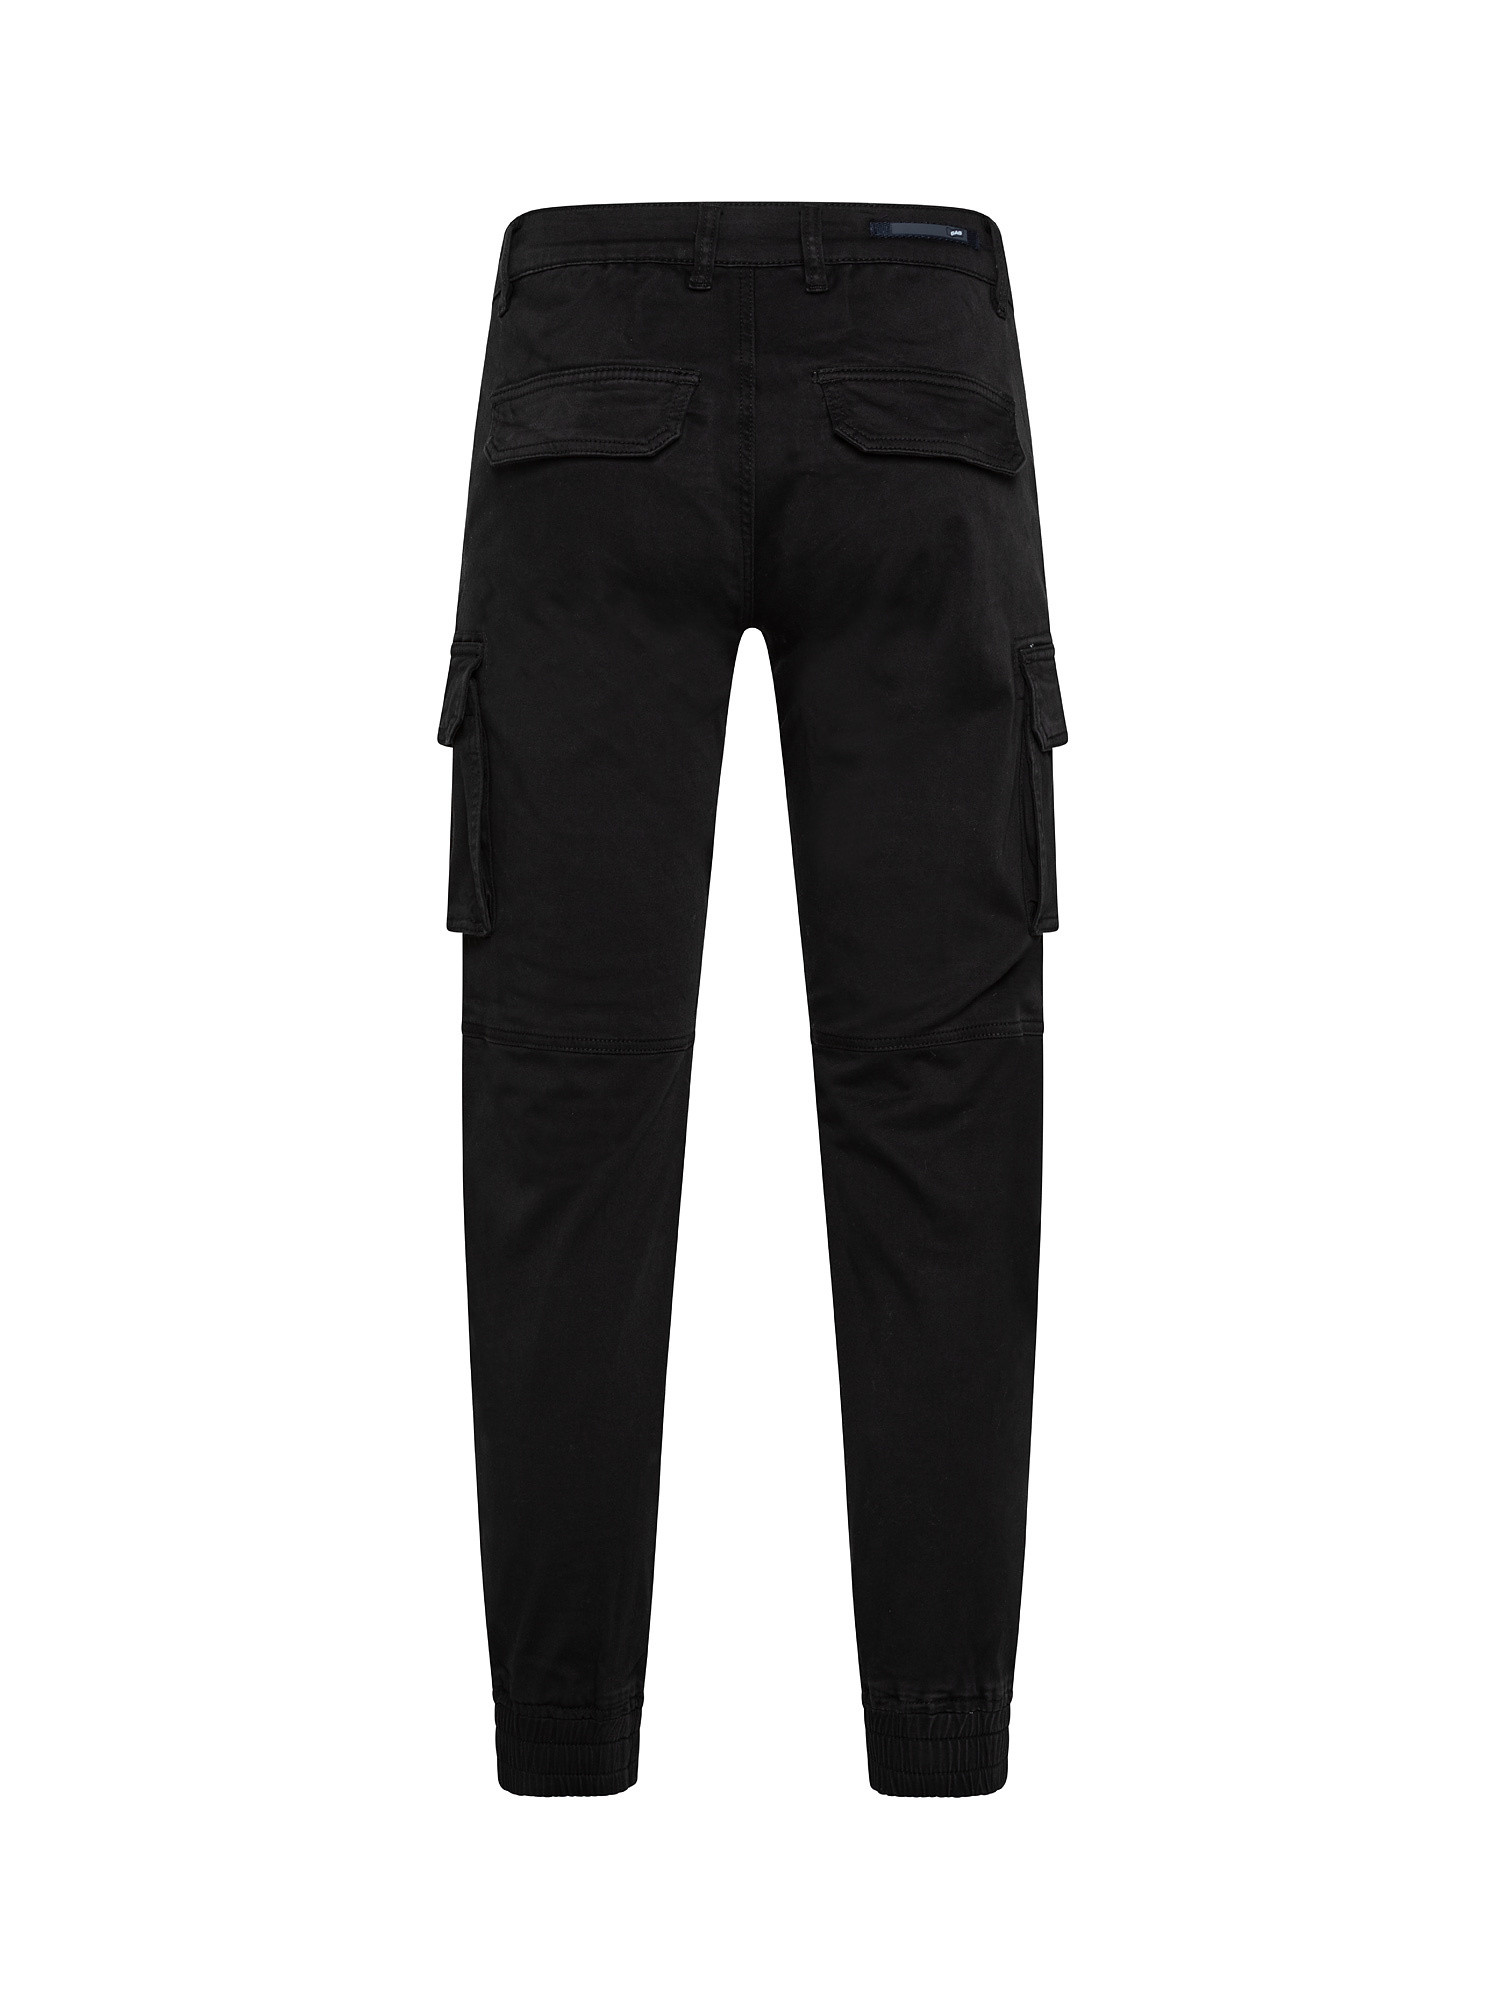 Stretch cotton cargo pants, Black, large image number 1